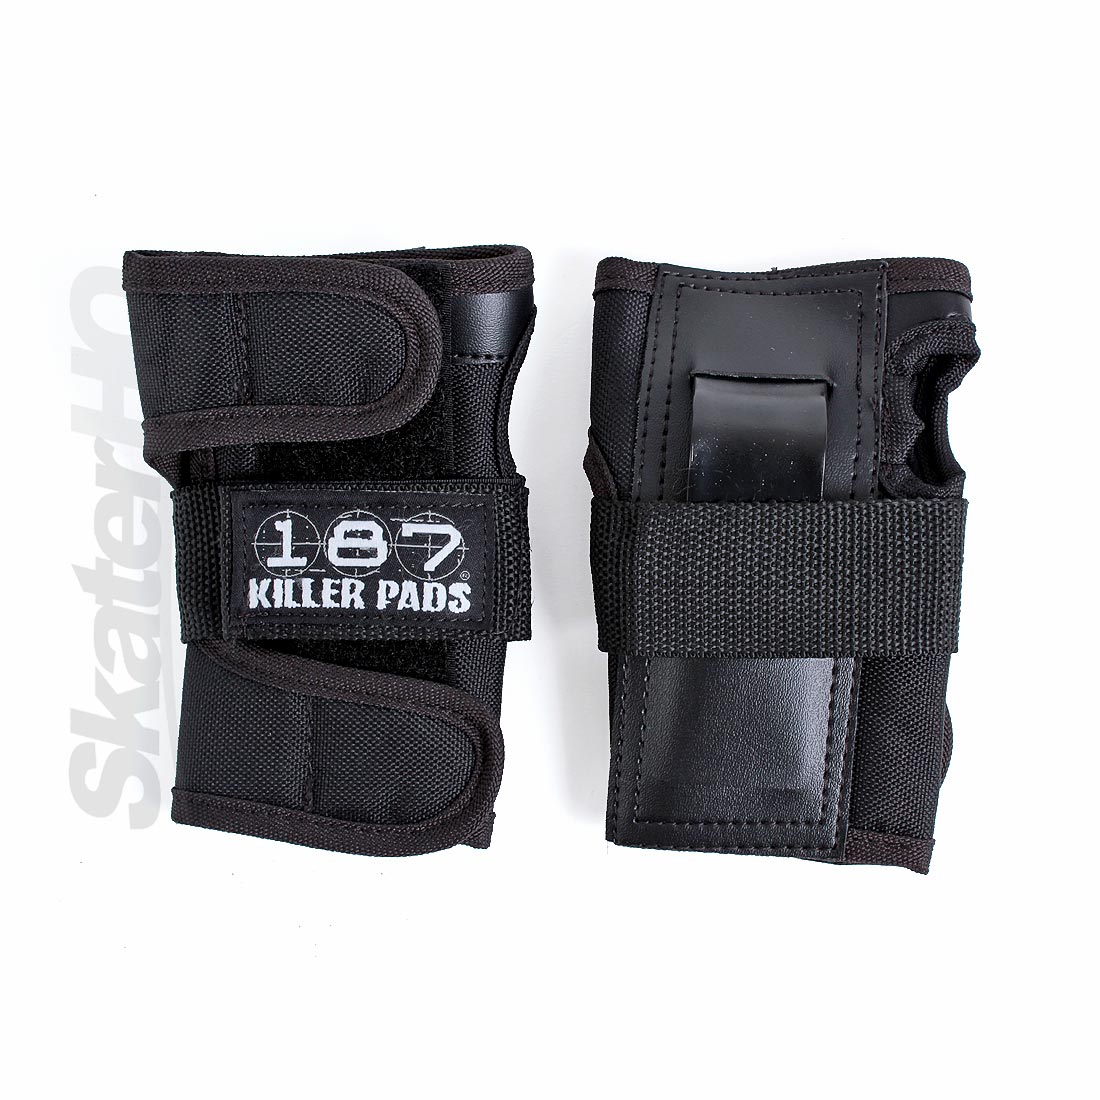 187 Wrist Guards - Black Protective Gear